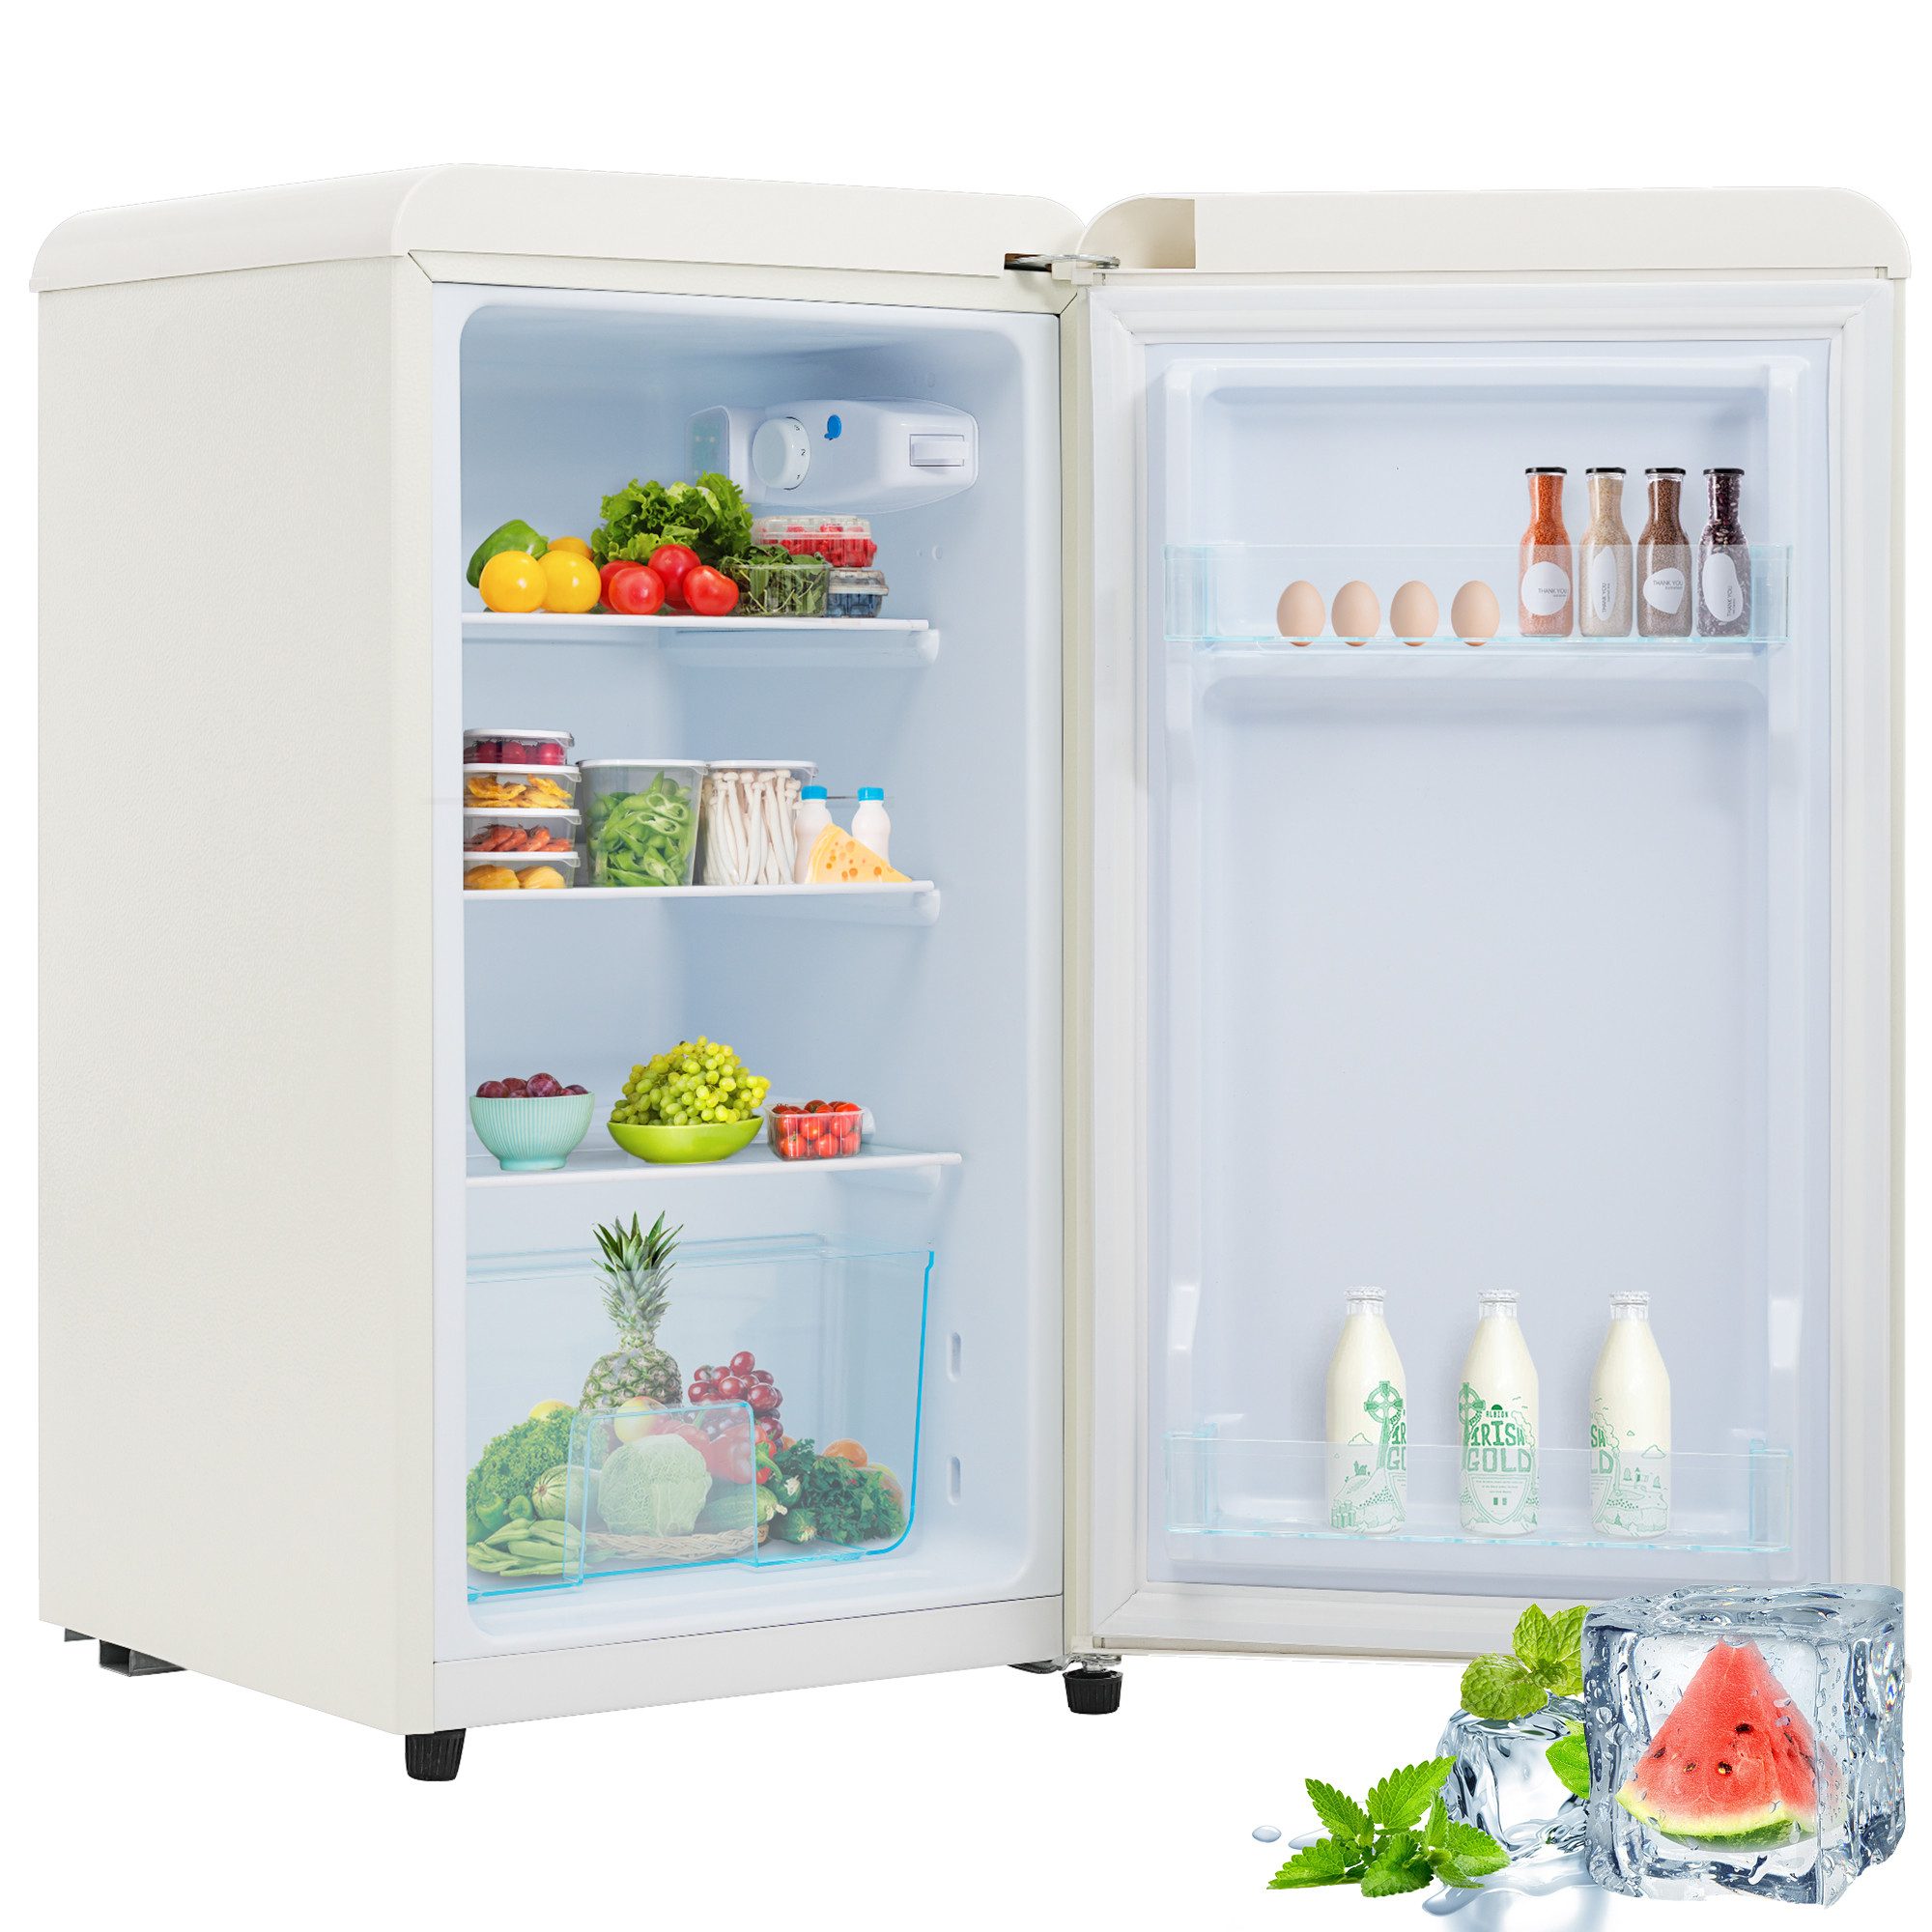 Merax Table Top Kühlschrank BL-76, 72 cm hoch, 41 cm breit, Retro Tischkühlschrank Mini-Kühlschrank freistehend kompakt